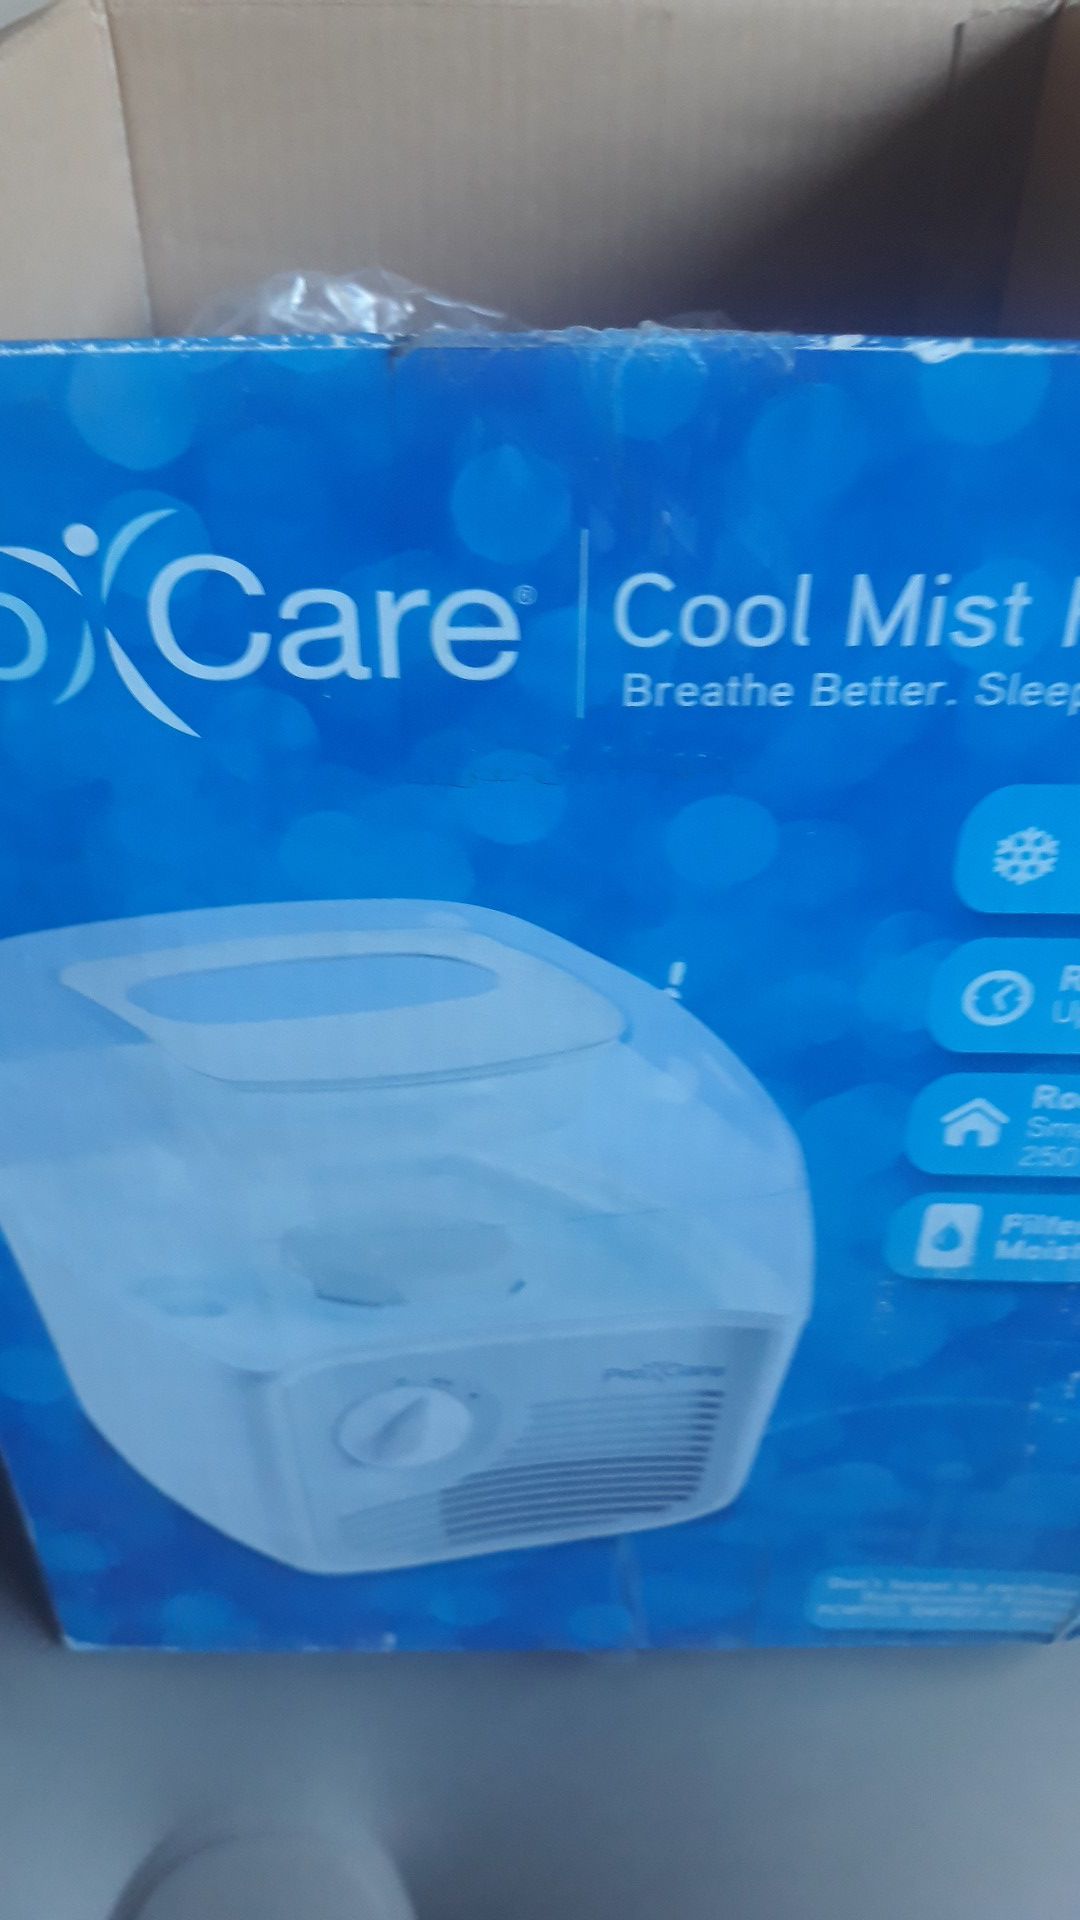 Pro care mist humidifier